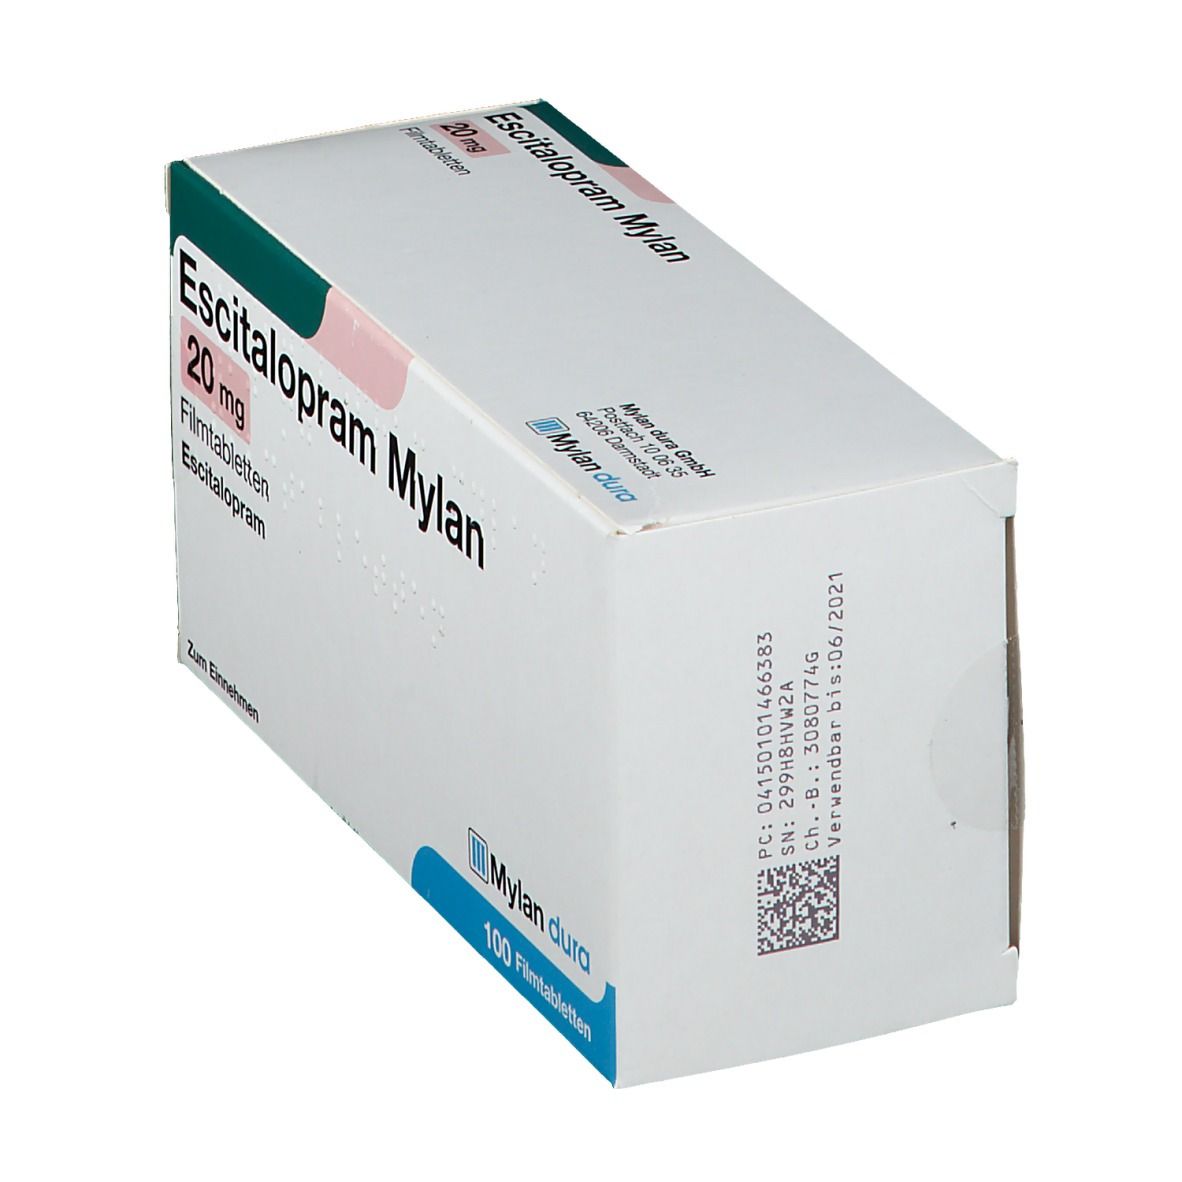 Escitalopram Mylan 20 mg